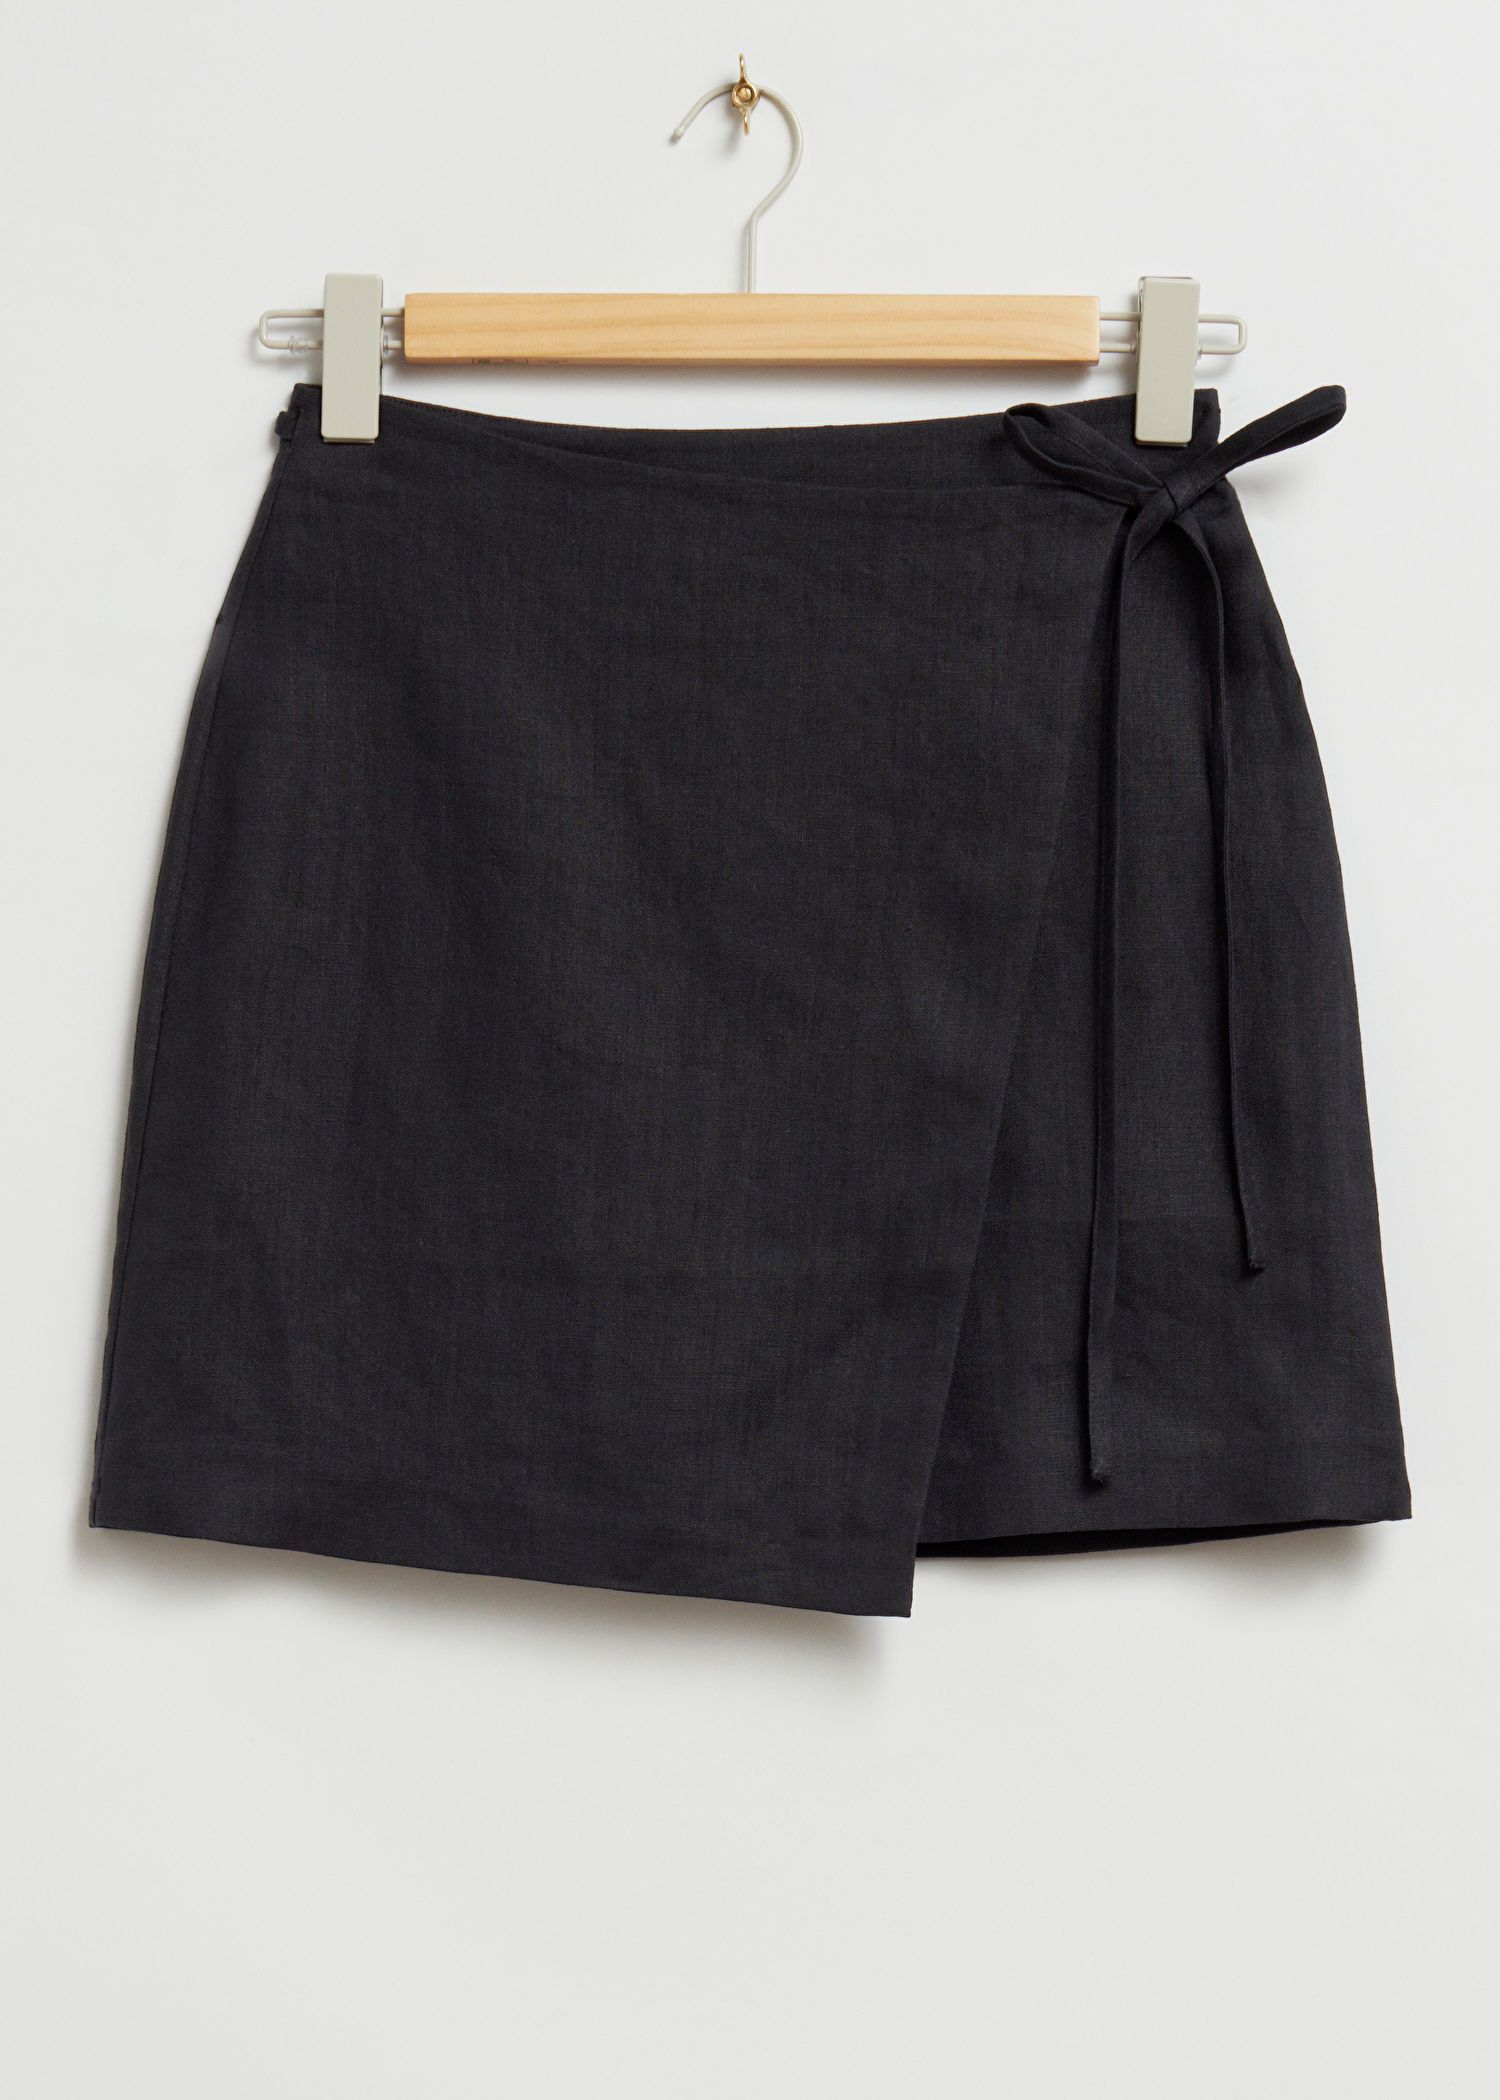 '90s Inspired Linen Wrap Skirt | & Other Stories US